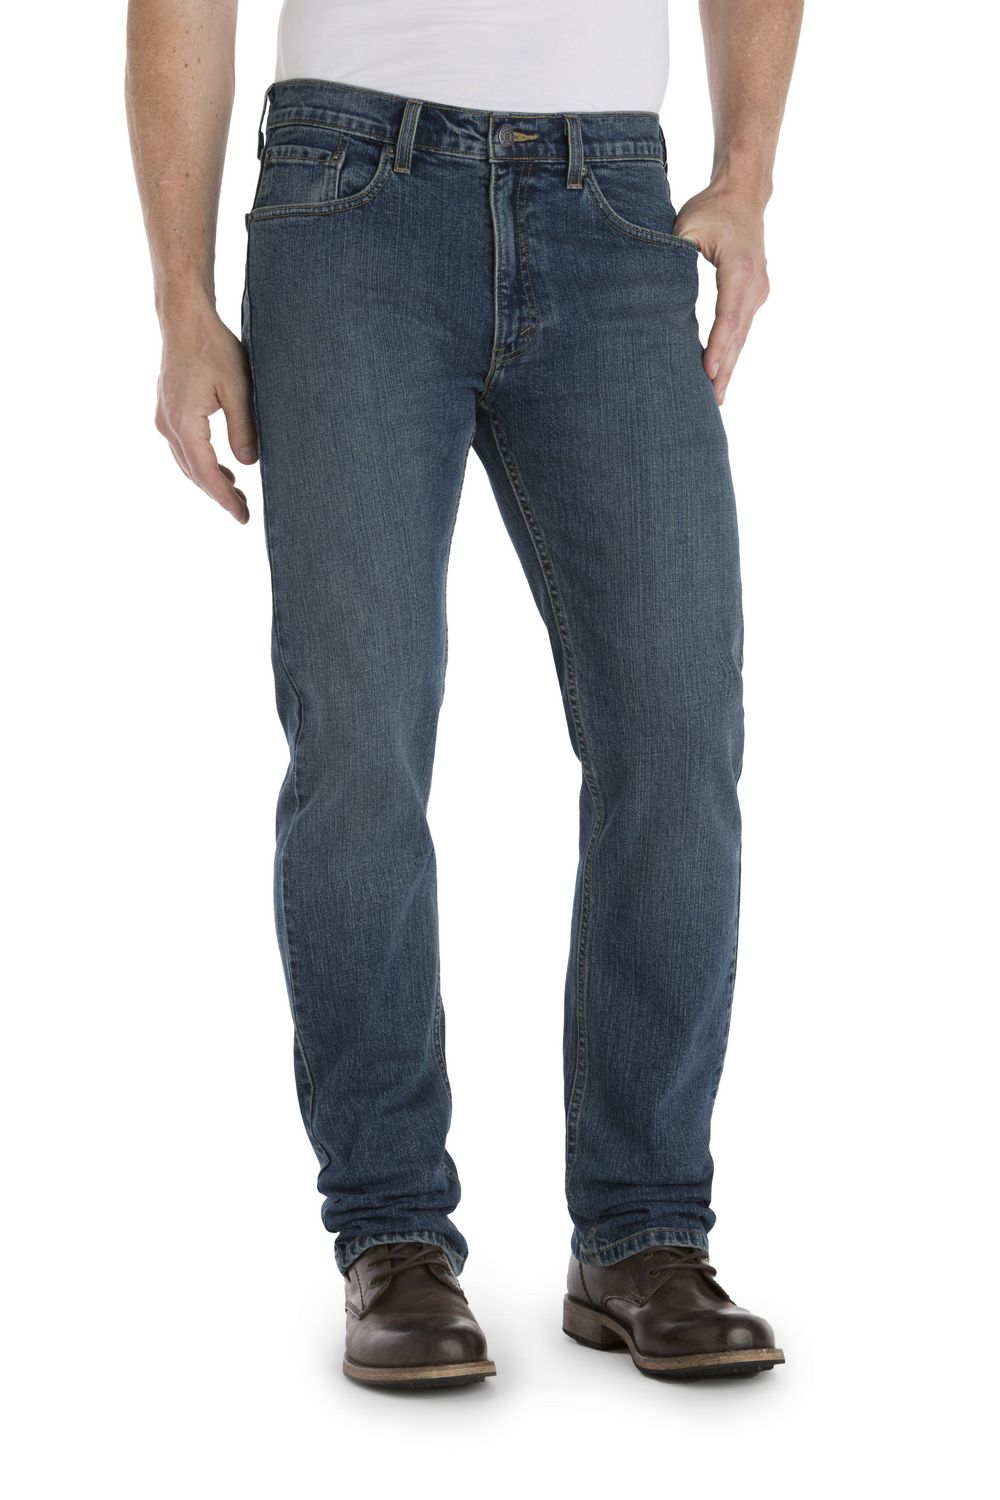 levis mens regular jeans